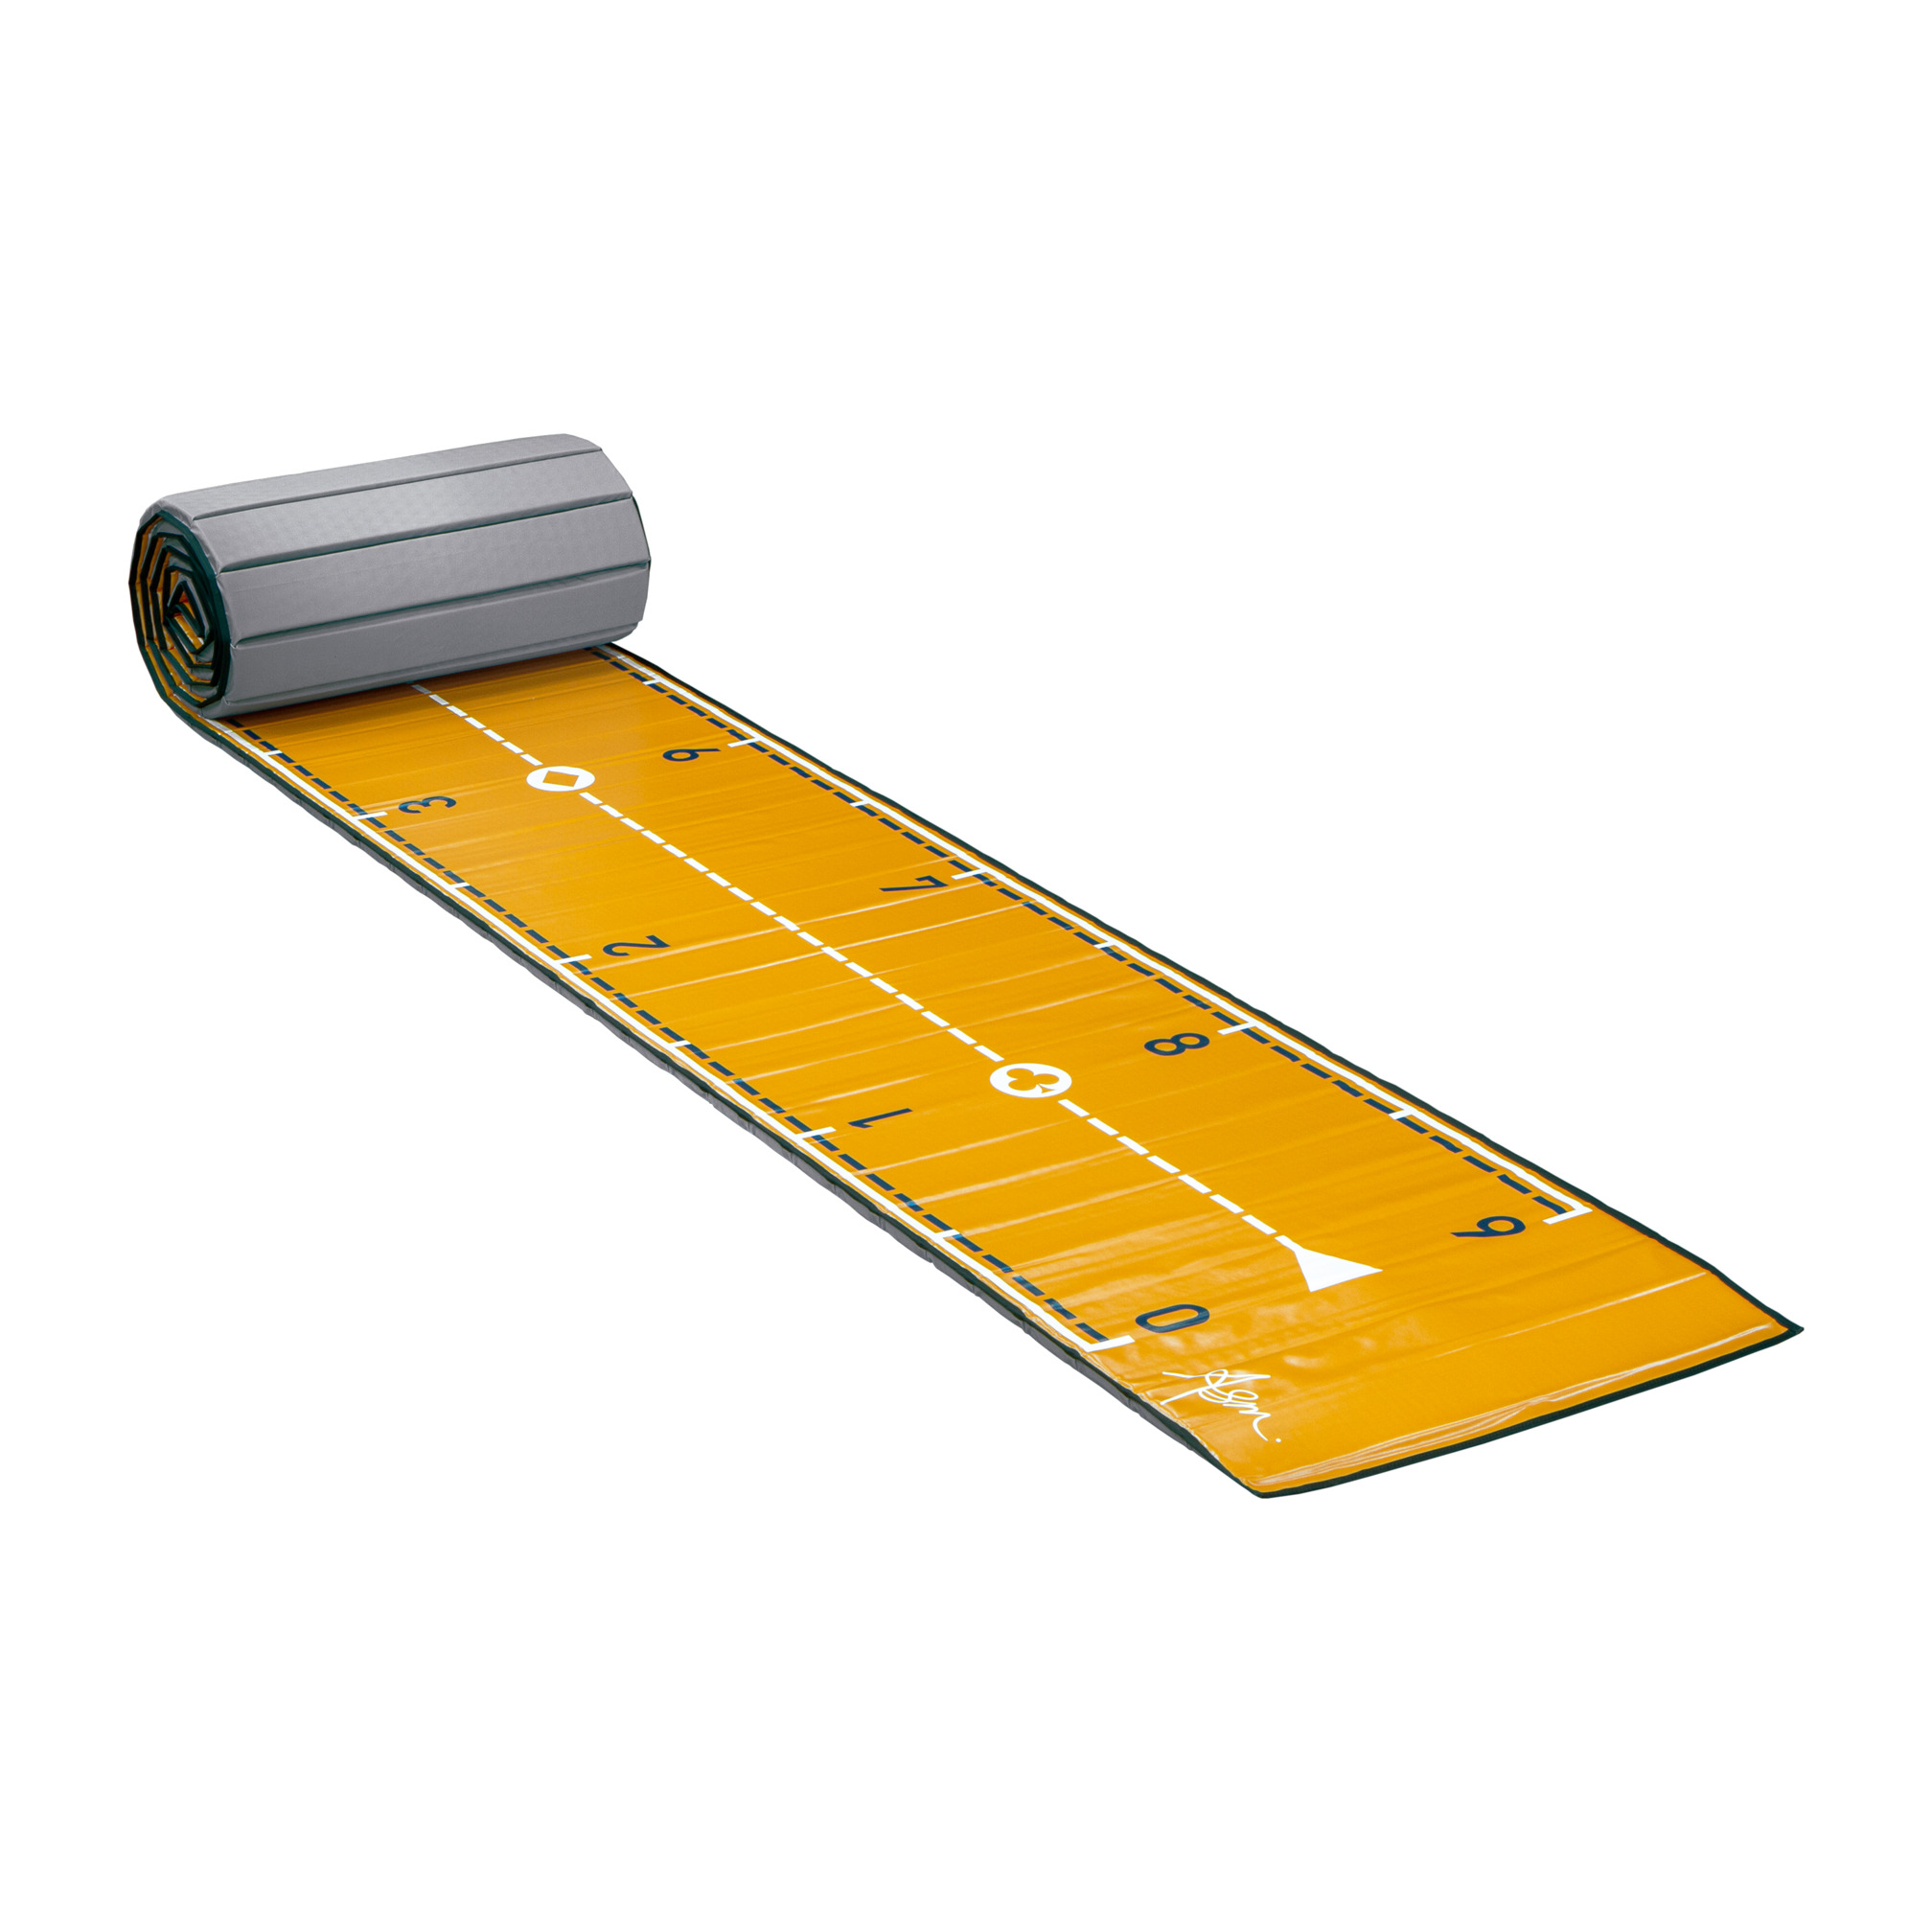 ASM long mat Ruler 10 m, sandwich padding